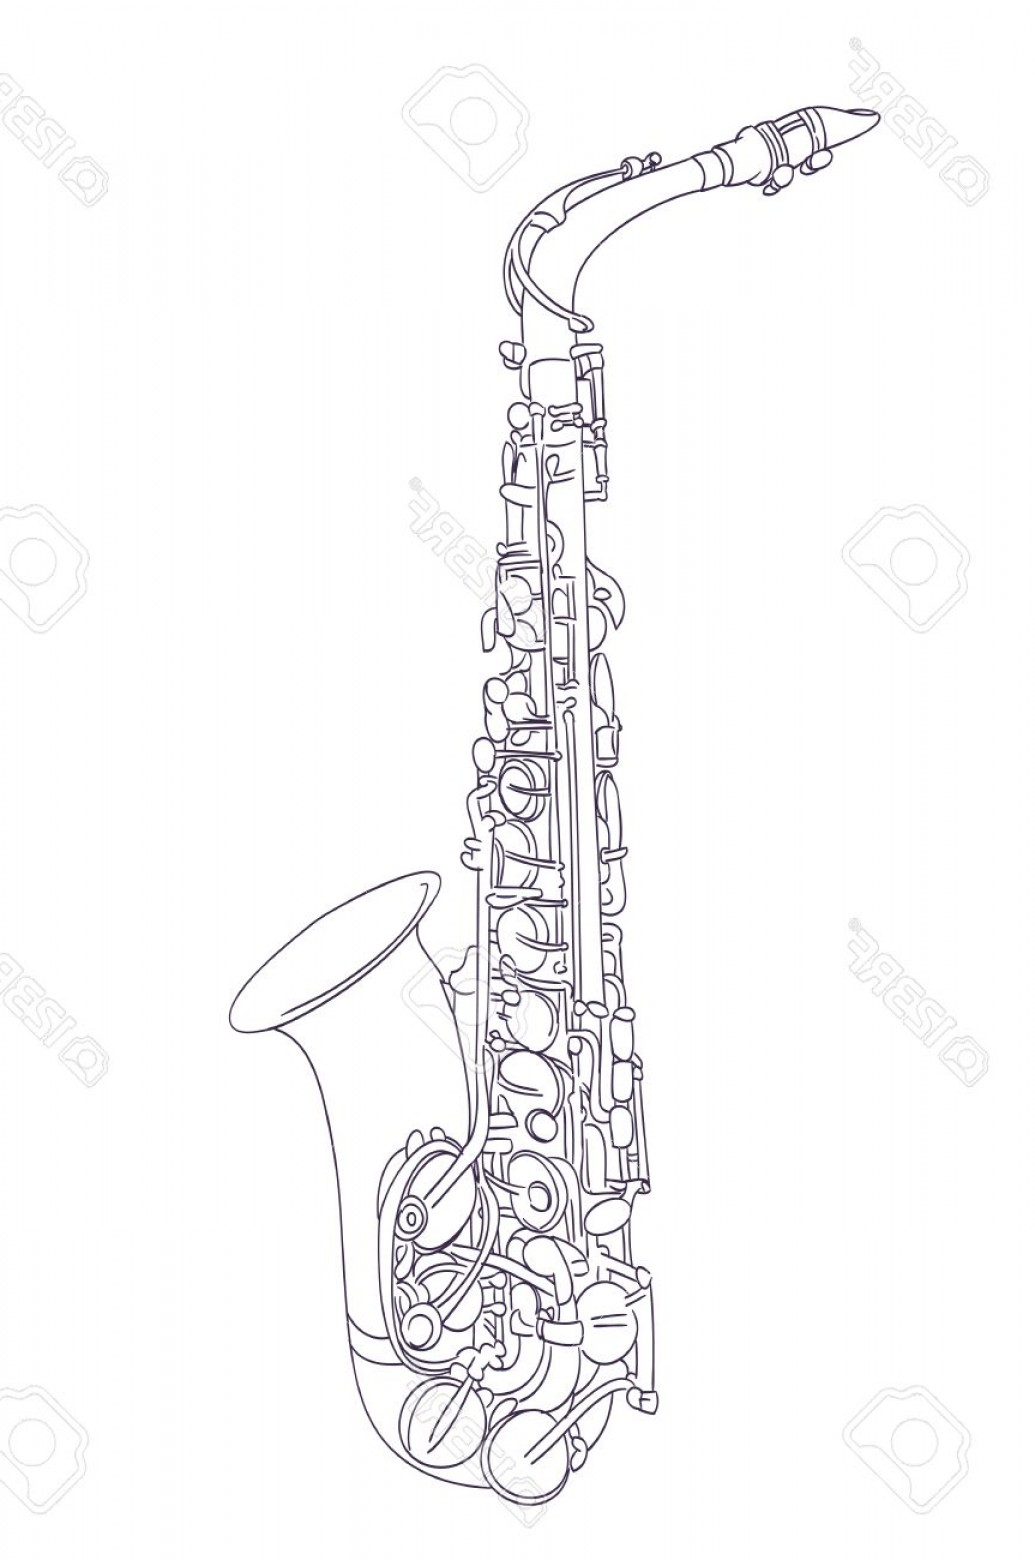 Alto Saxophone Sketch at Explore collection of